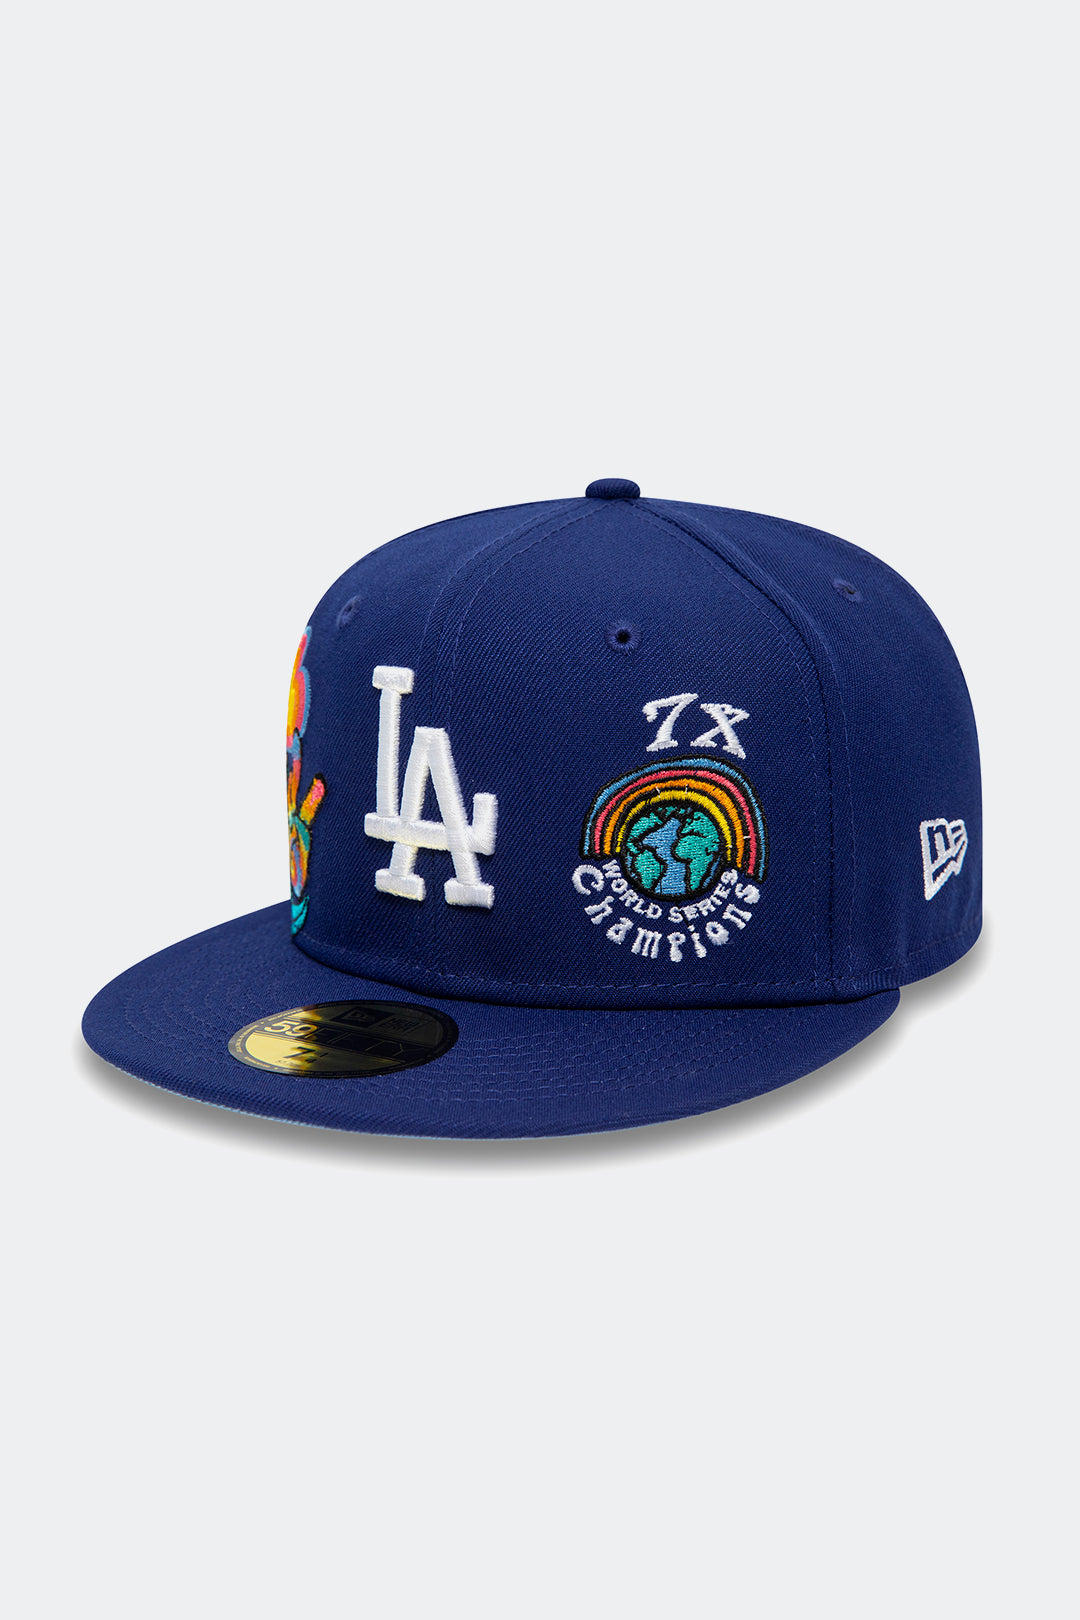 Gorra Los Angeles Dodgers MLB MLB Swirl 59Fifty Cerrada Azul Oscuro New Era  - New Era Colombia